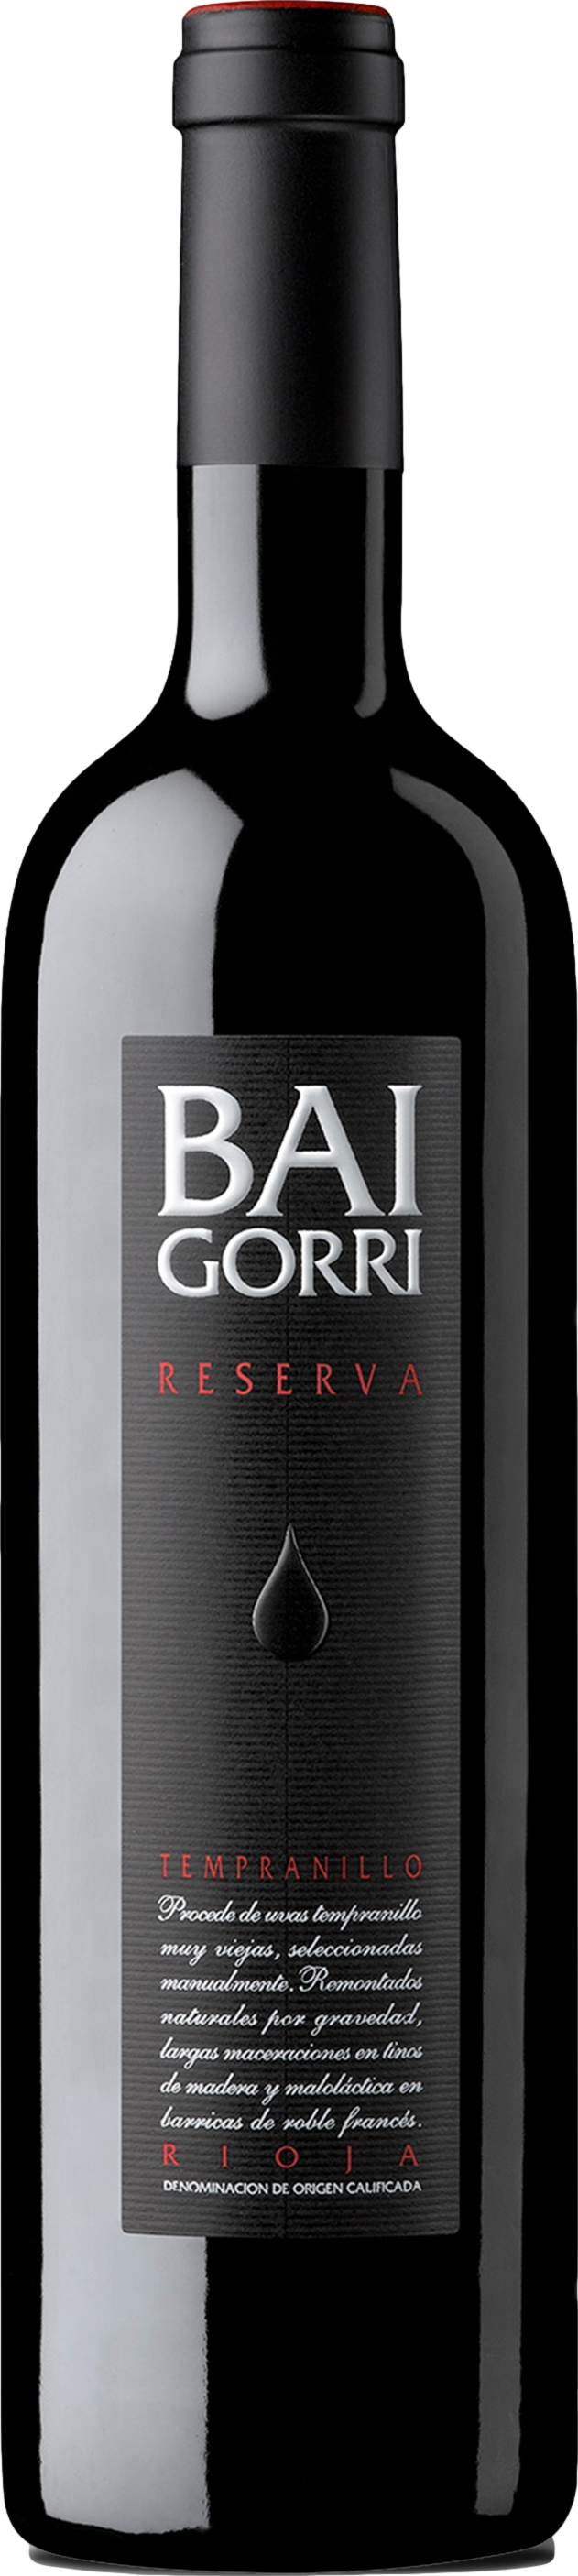 Baigorri Reserva Rioja 2015